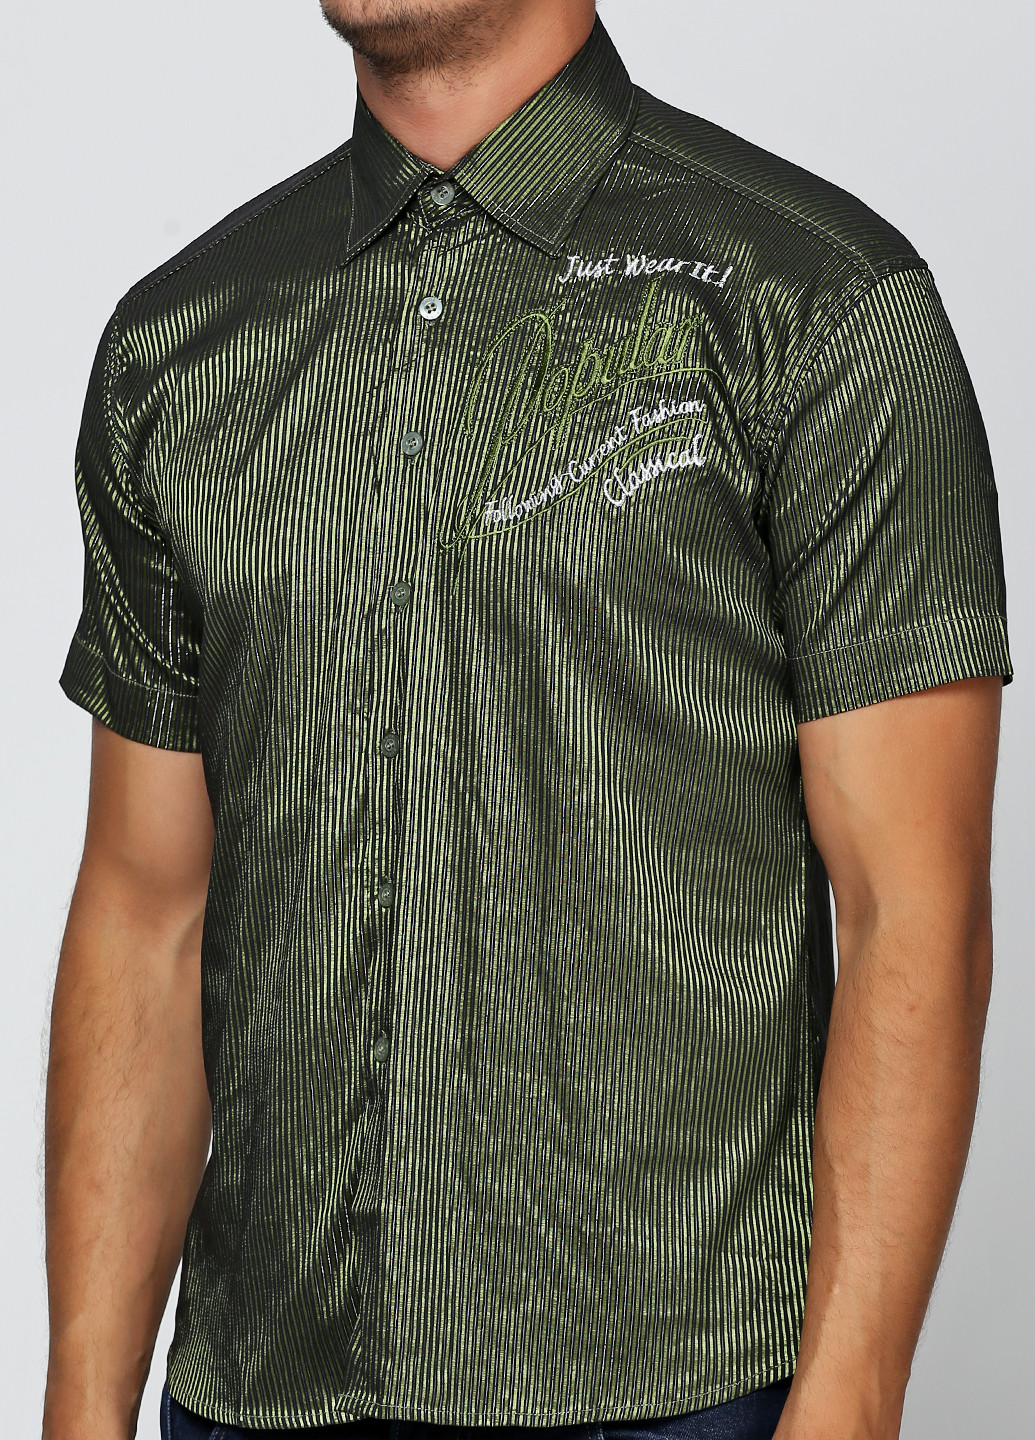 Темно-зеленая кэжуал рубашка в полоску Zoor с коротким рукавом